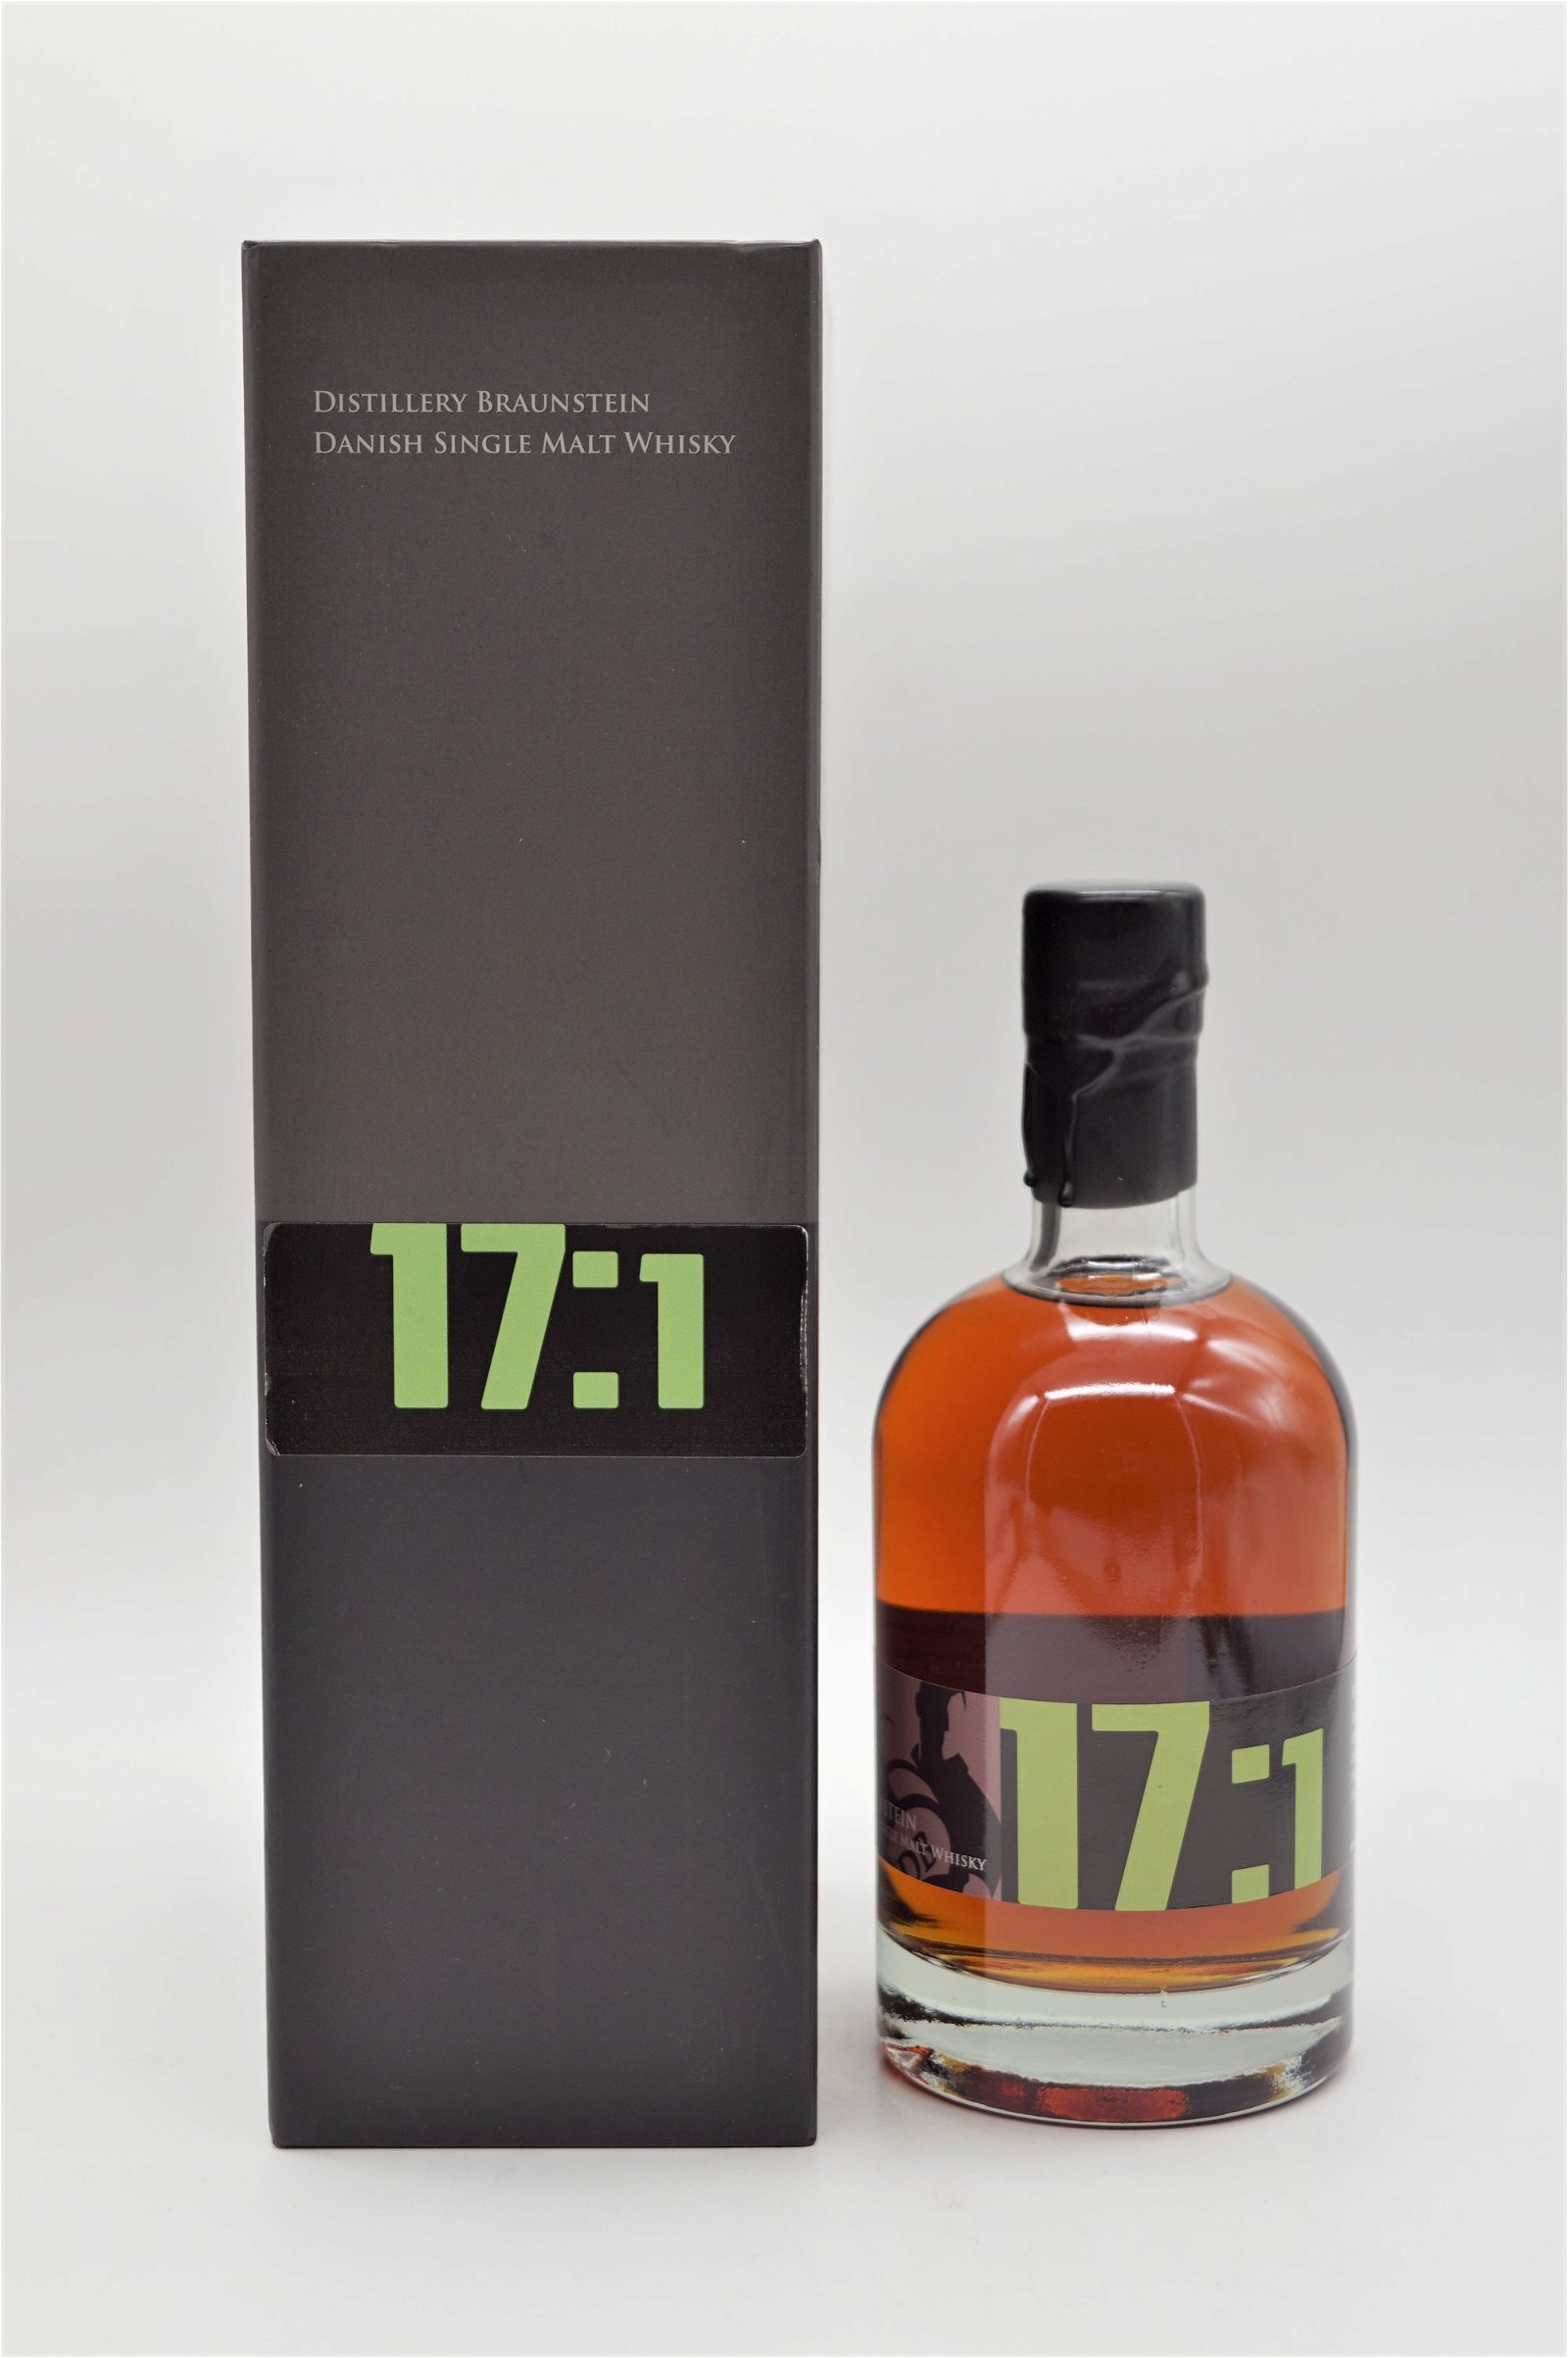 Braunstein Libary Collection 17:1 Dansk Single Malt Whisky